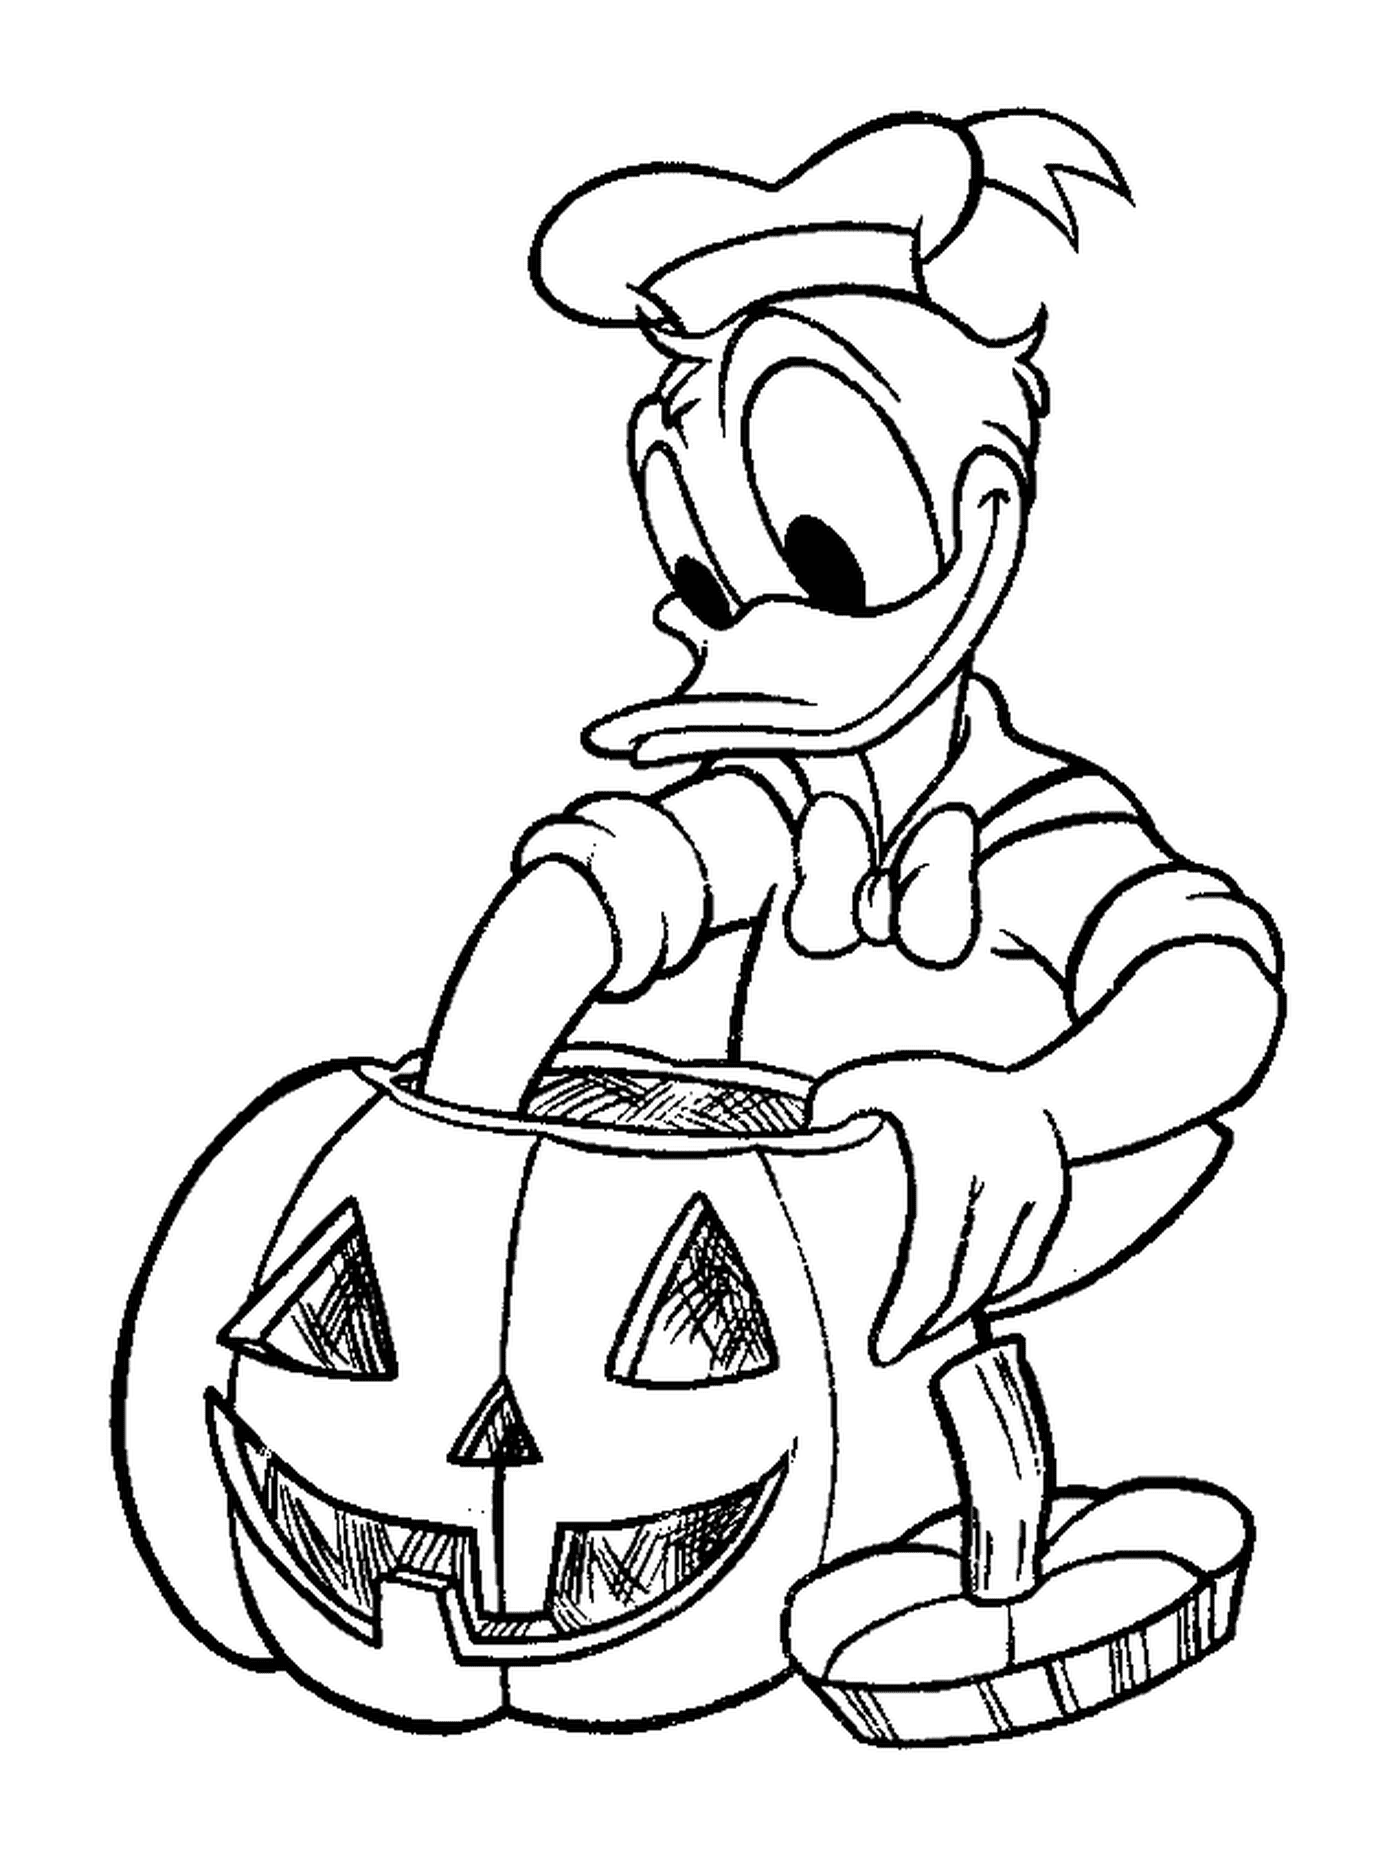  Donald makes his pumpkin for Halloween 